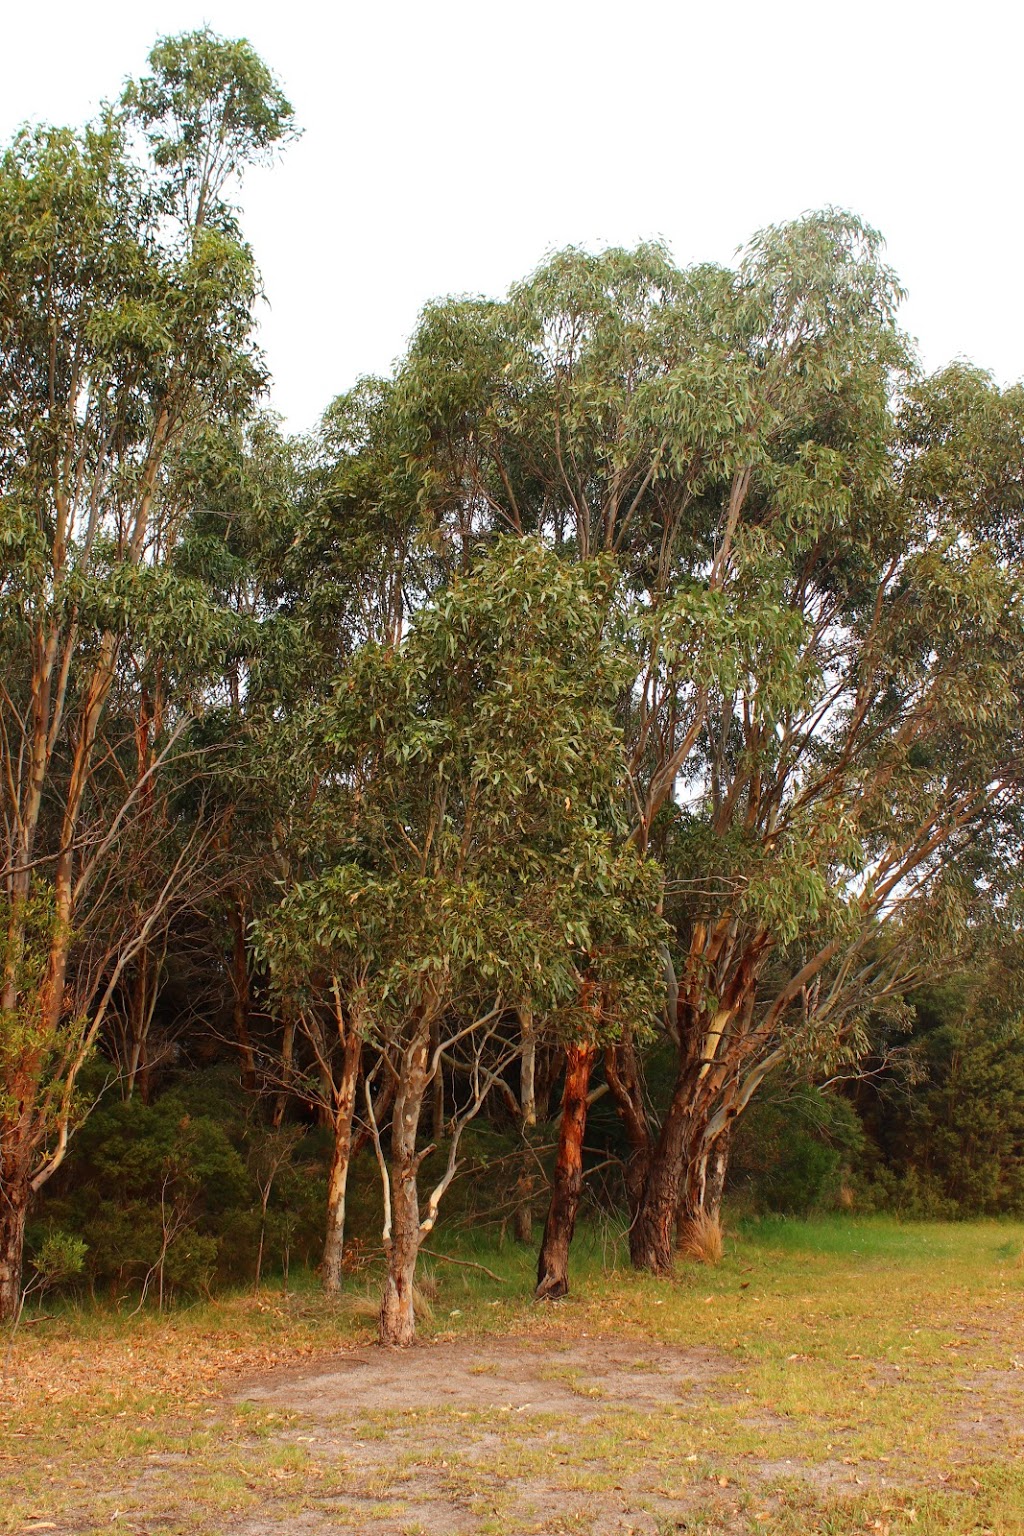 Macleod Morass Game Reserve | park | Bosworth Rd, Bairnsdale VIC 3875, Australia